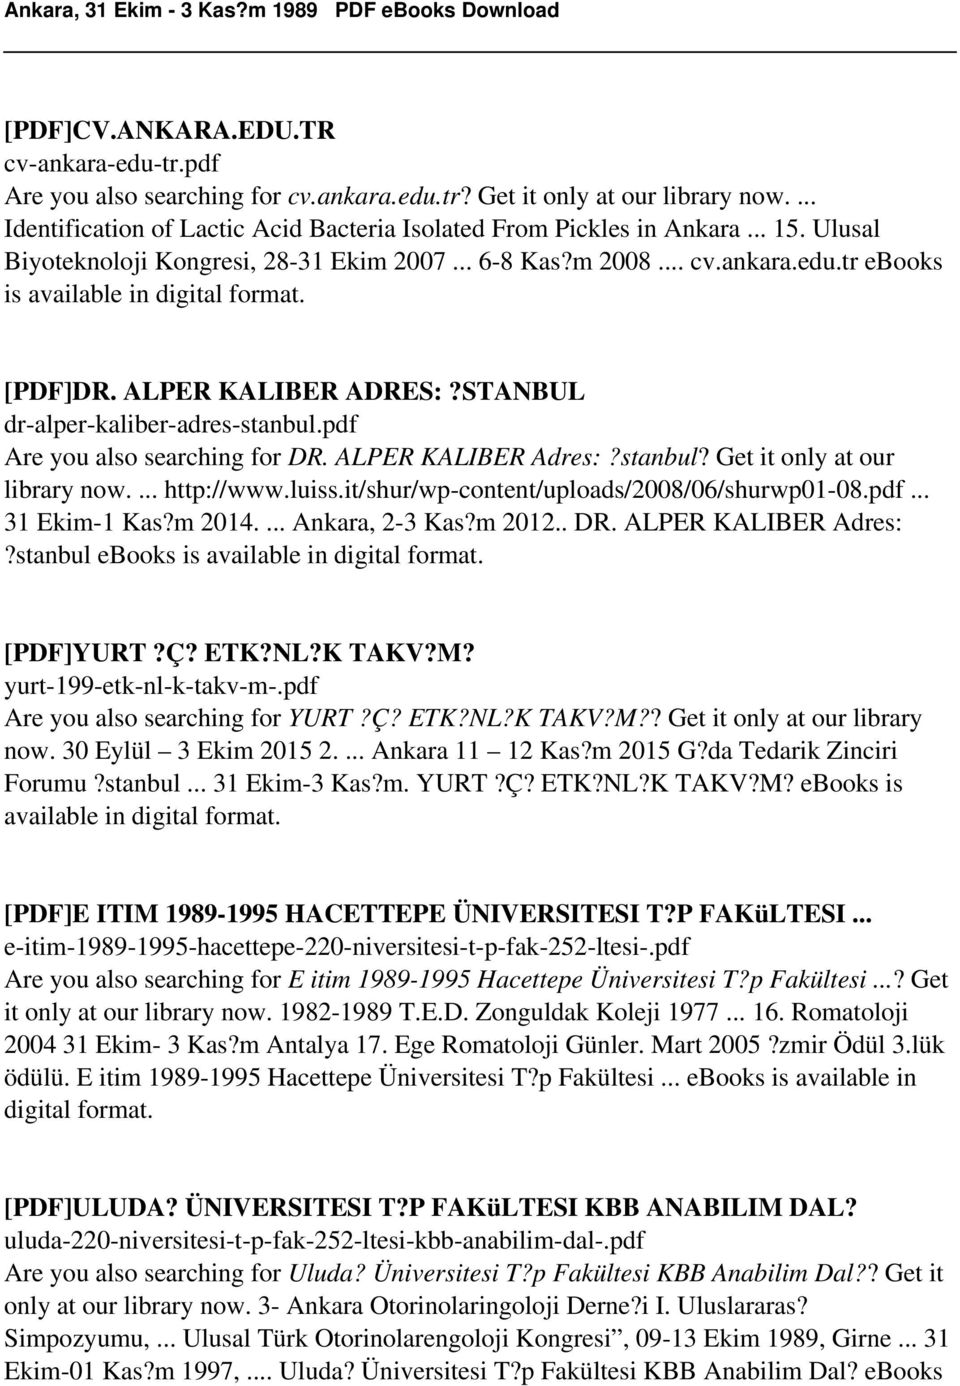 ALPER KALIBER Adres:?stanbul? Get it only at our library now.... http://www.luiss.it/shur/wp-content/uploads/2008/06/shurwp01-08.pdf... 31 Ekim-1 Kas?m 2014.... Ankara, 2-3 Kas?m 2012.. DR.